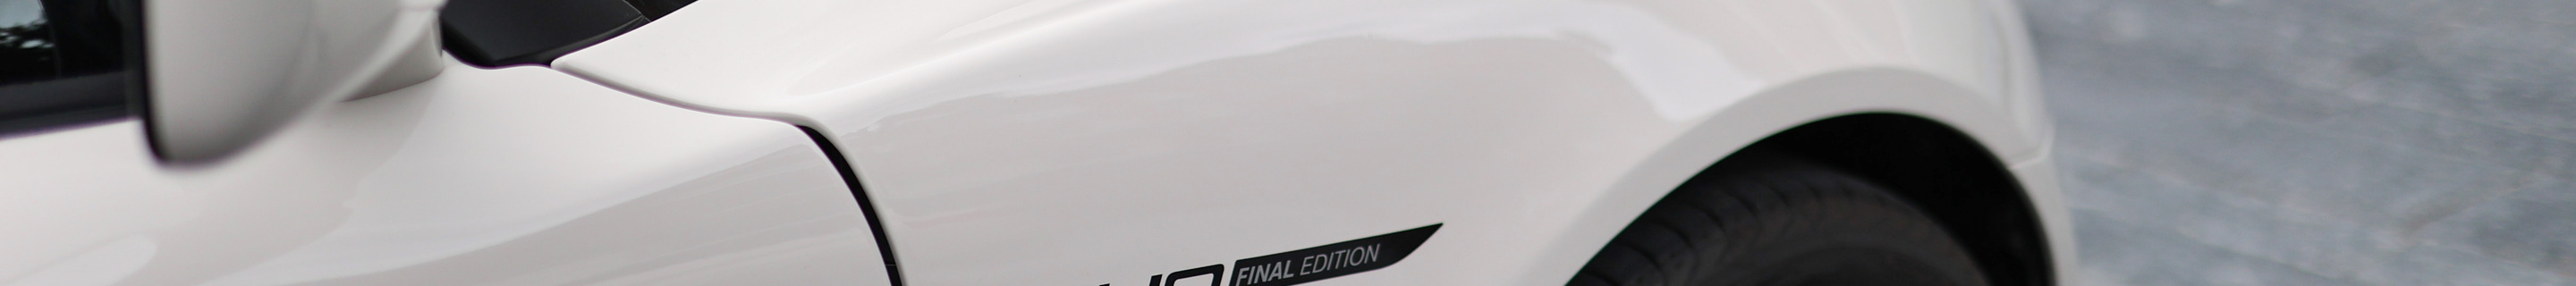 Lotus Elise S3 Sport 240 Final Edition